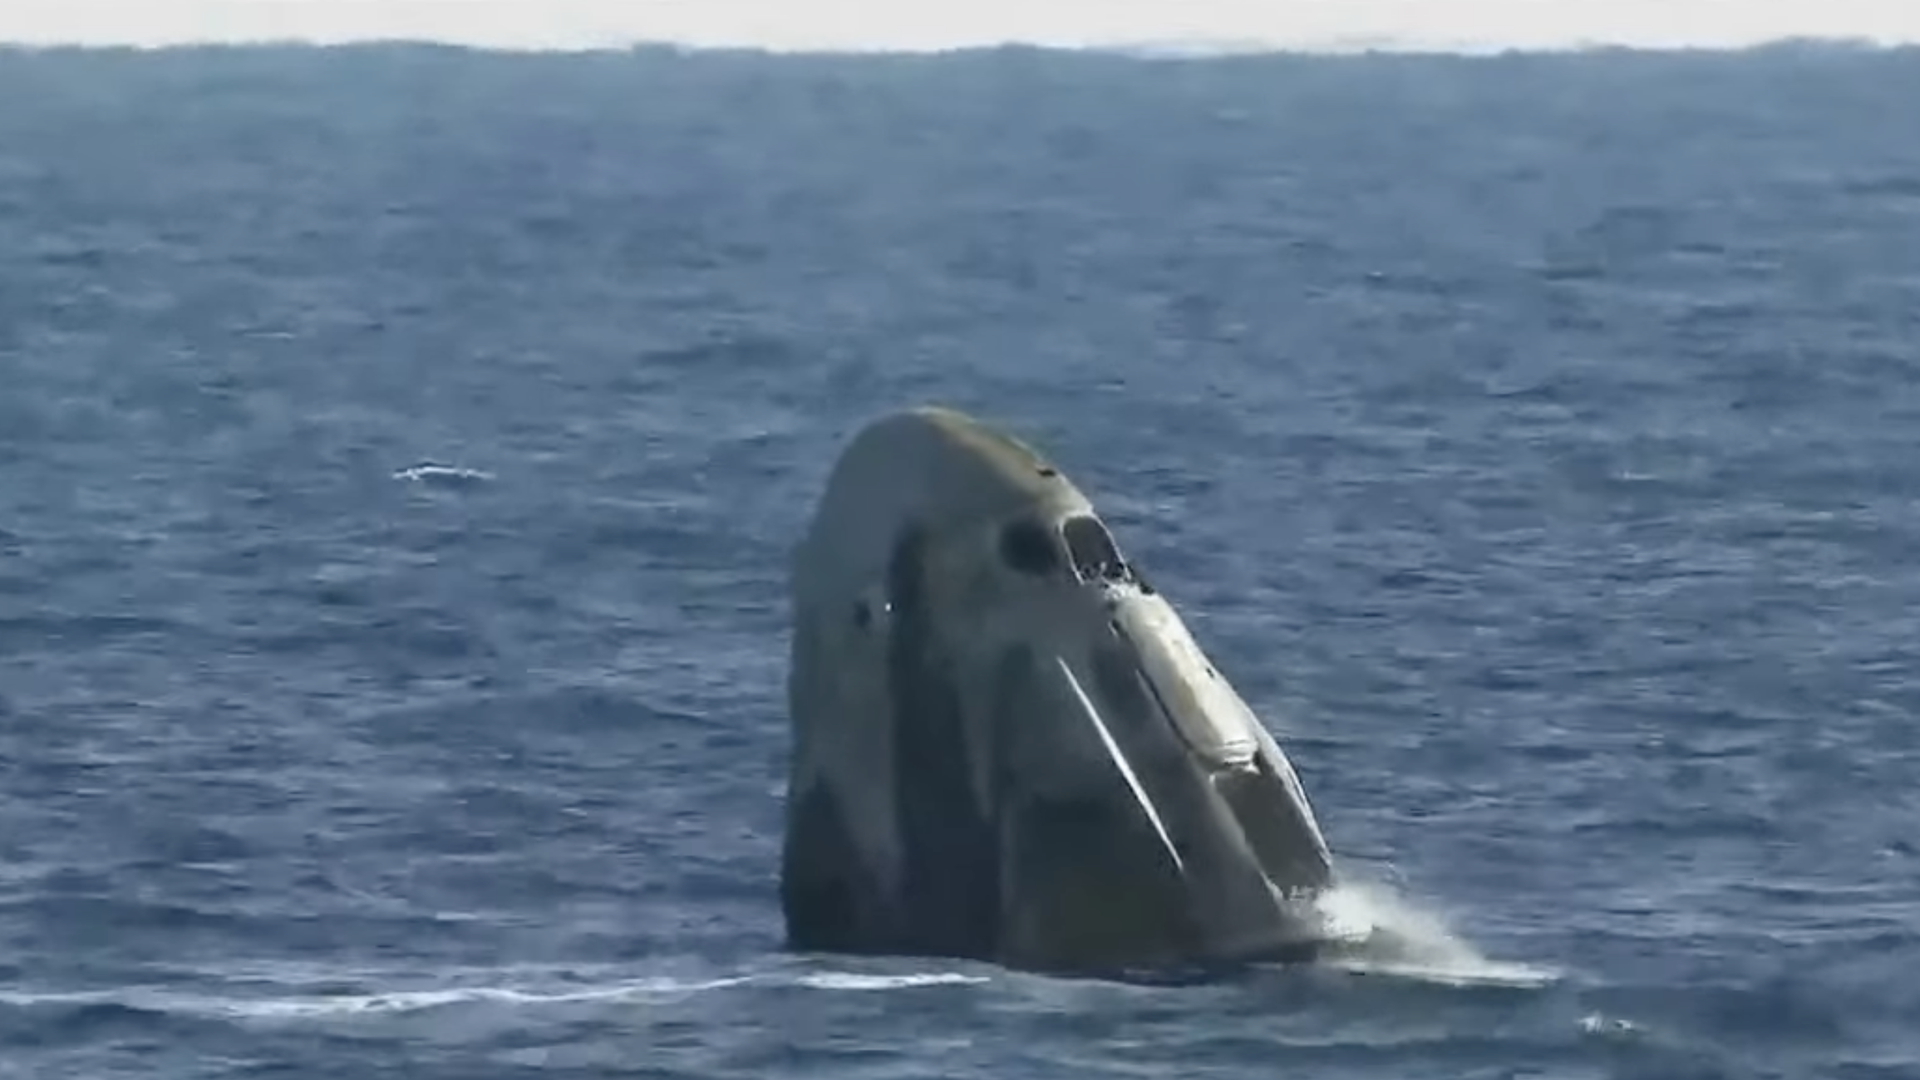 A SpaceX capsule carrying crewmembers bobs in the waters of the Atlantic Ocean.